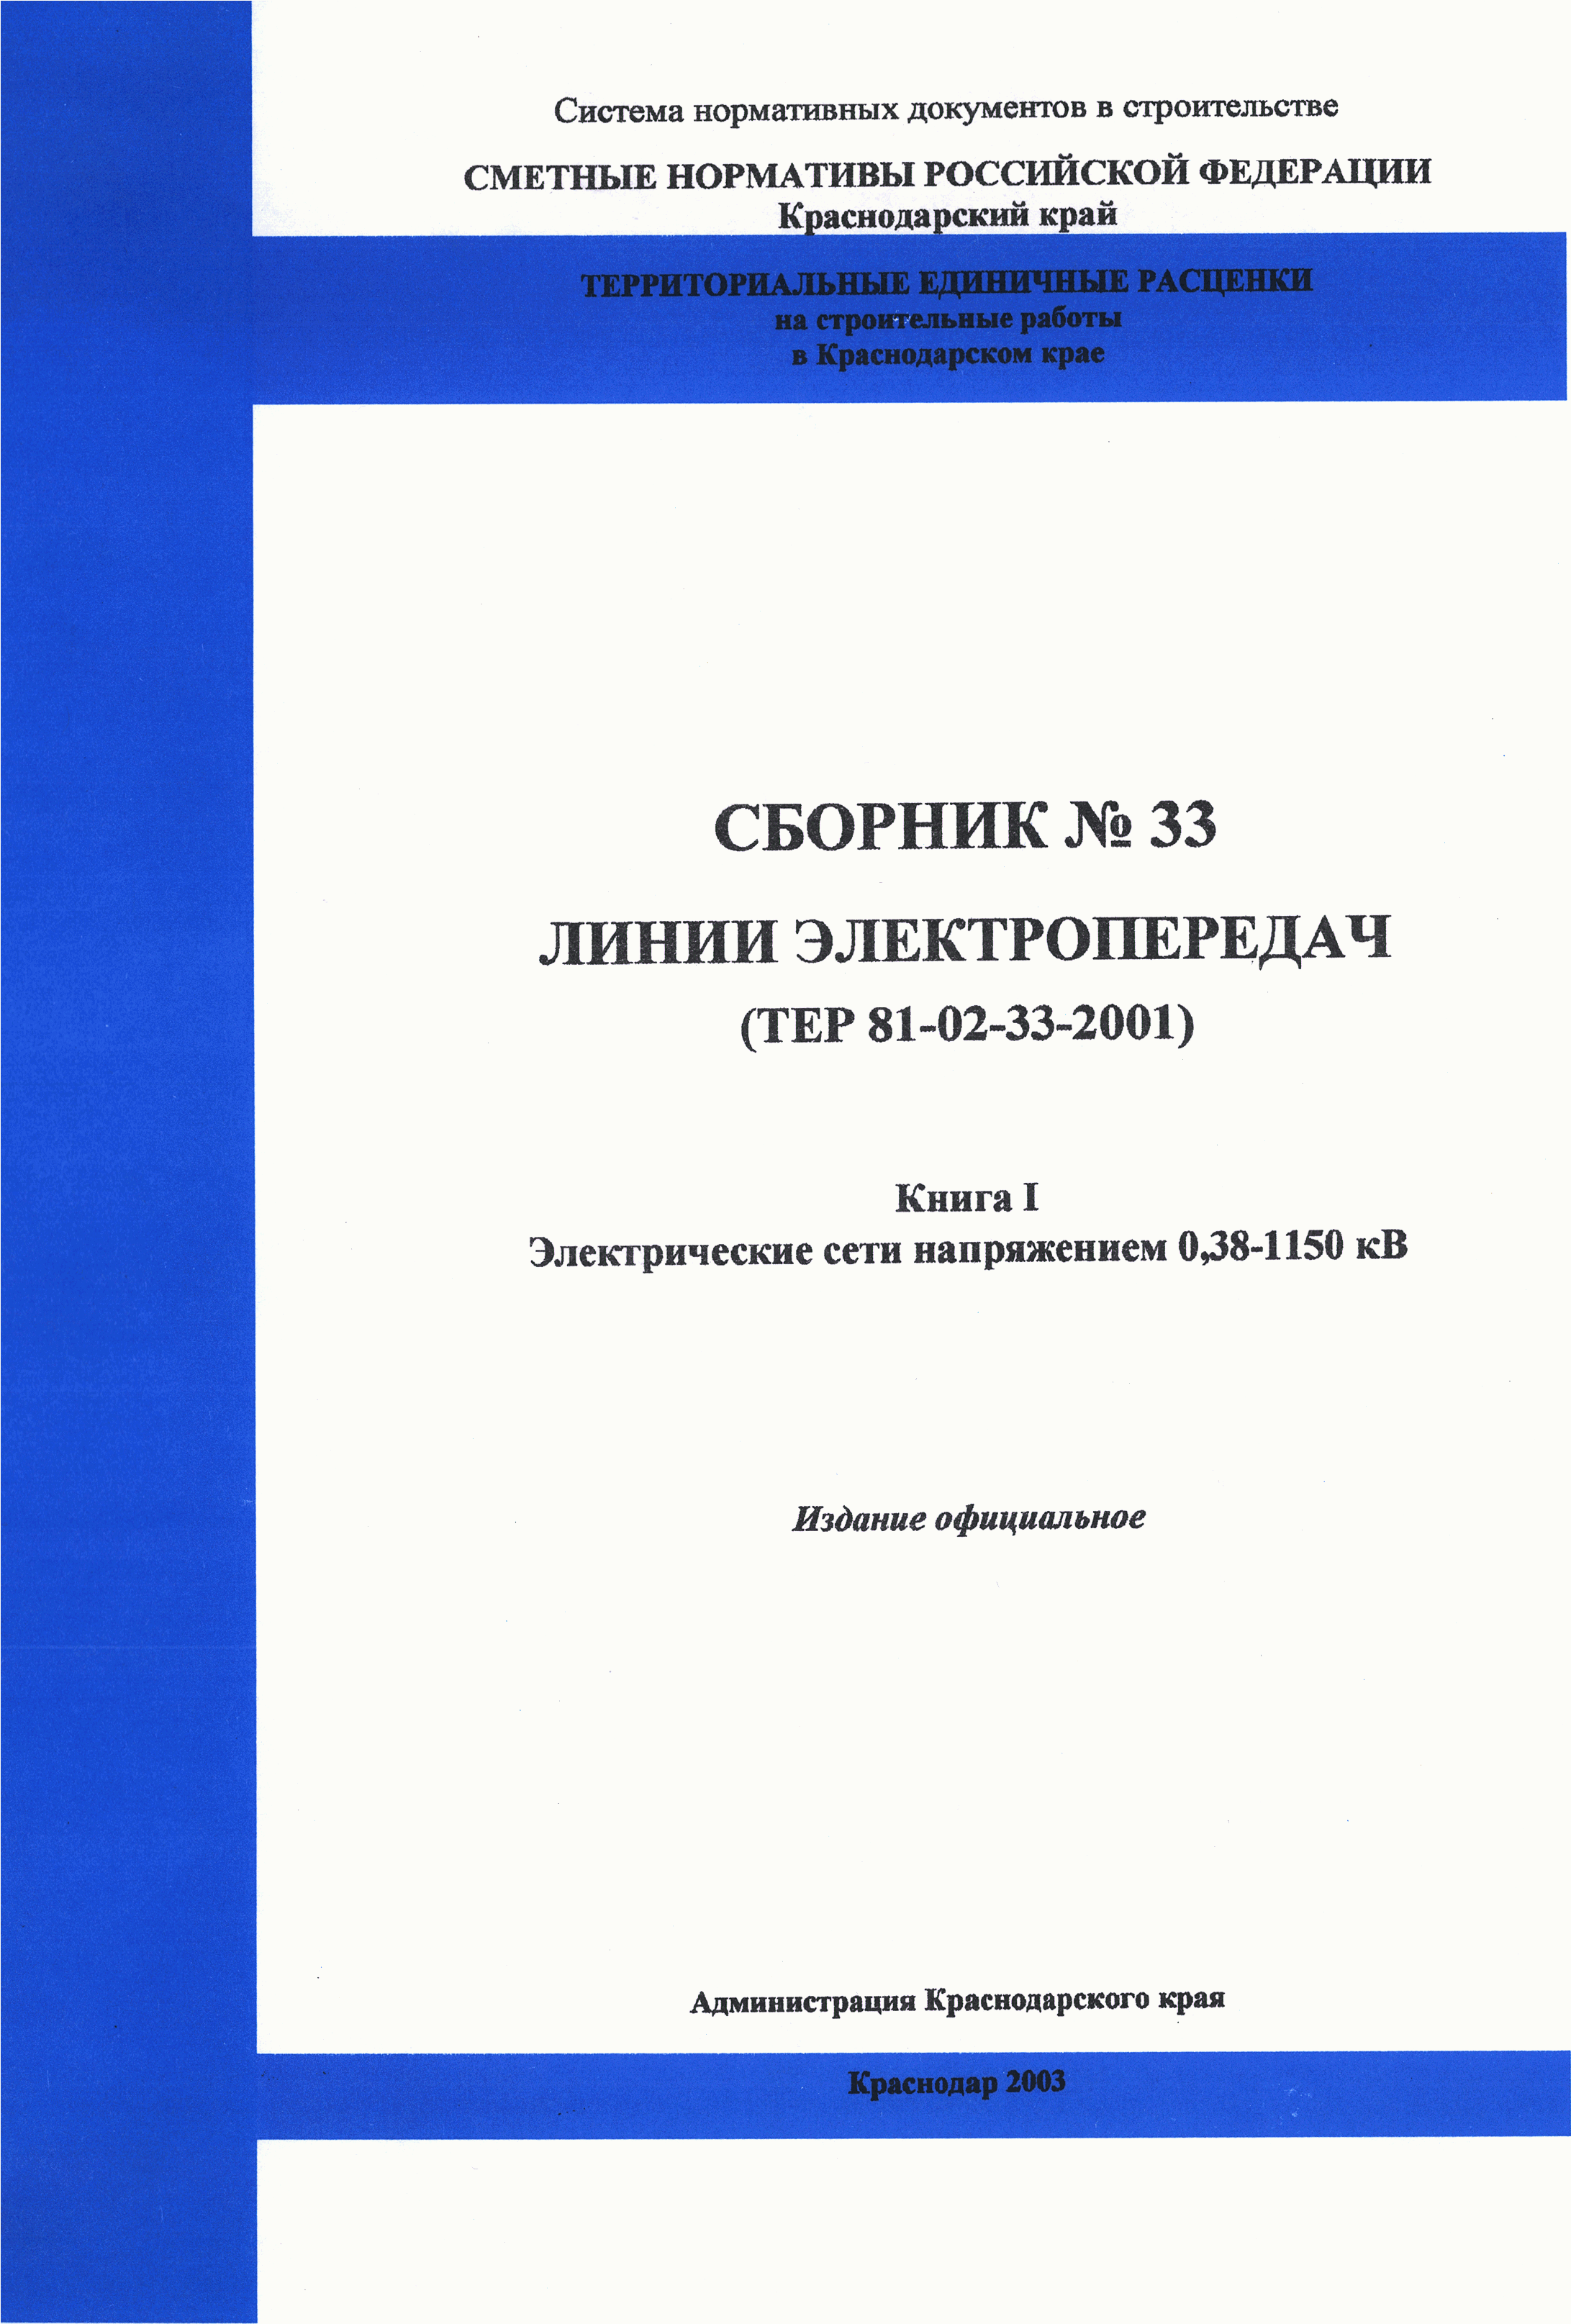 ТЕР Краснодарского края 2001-33